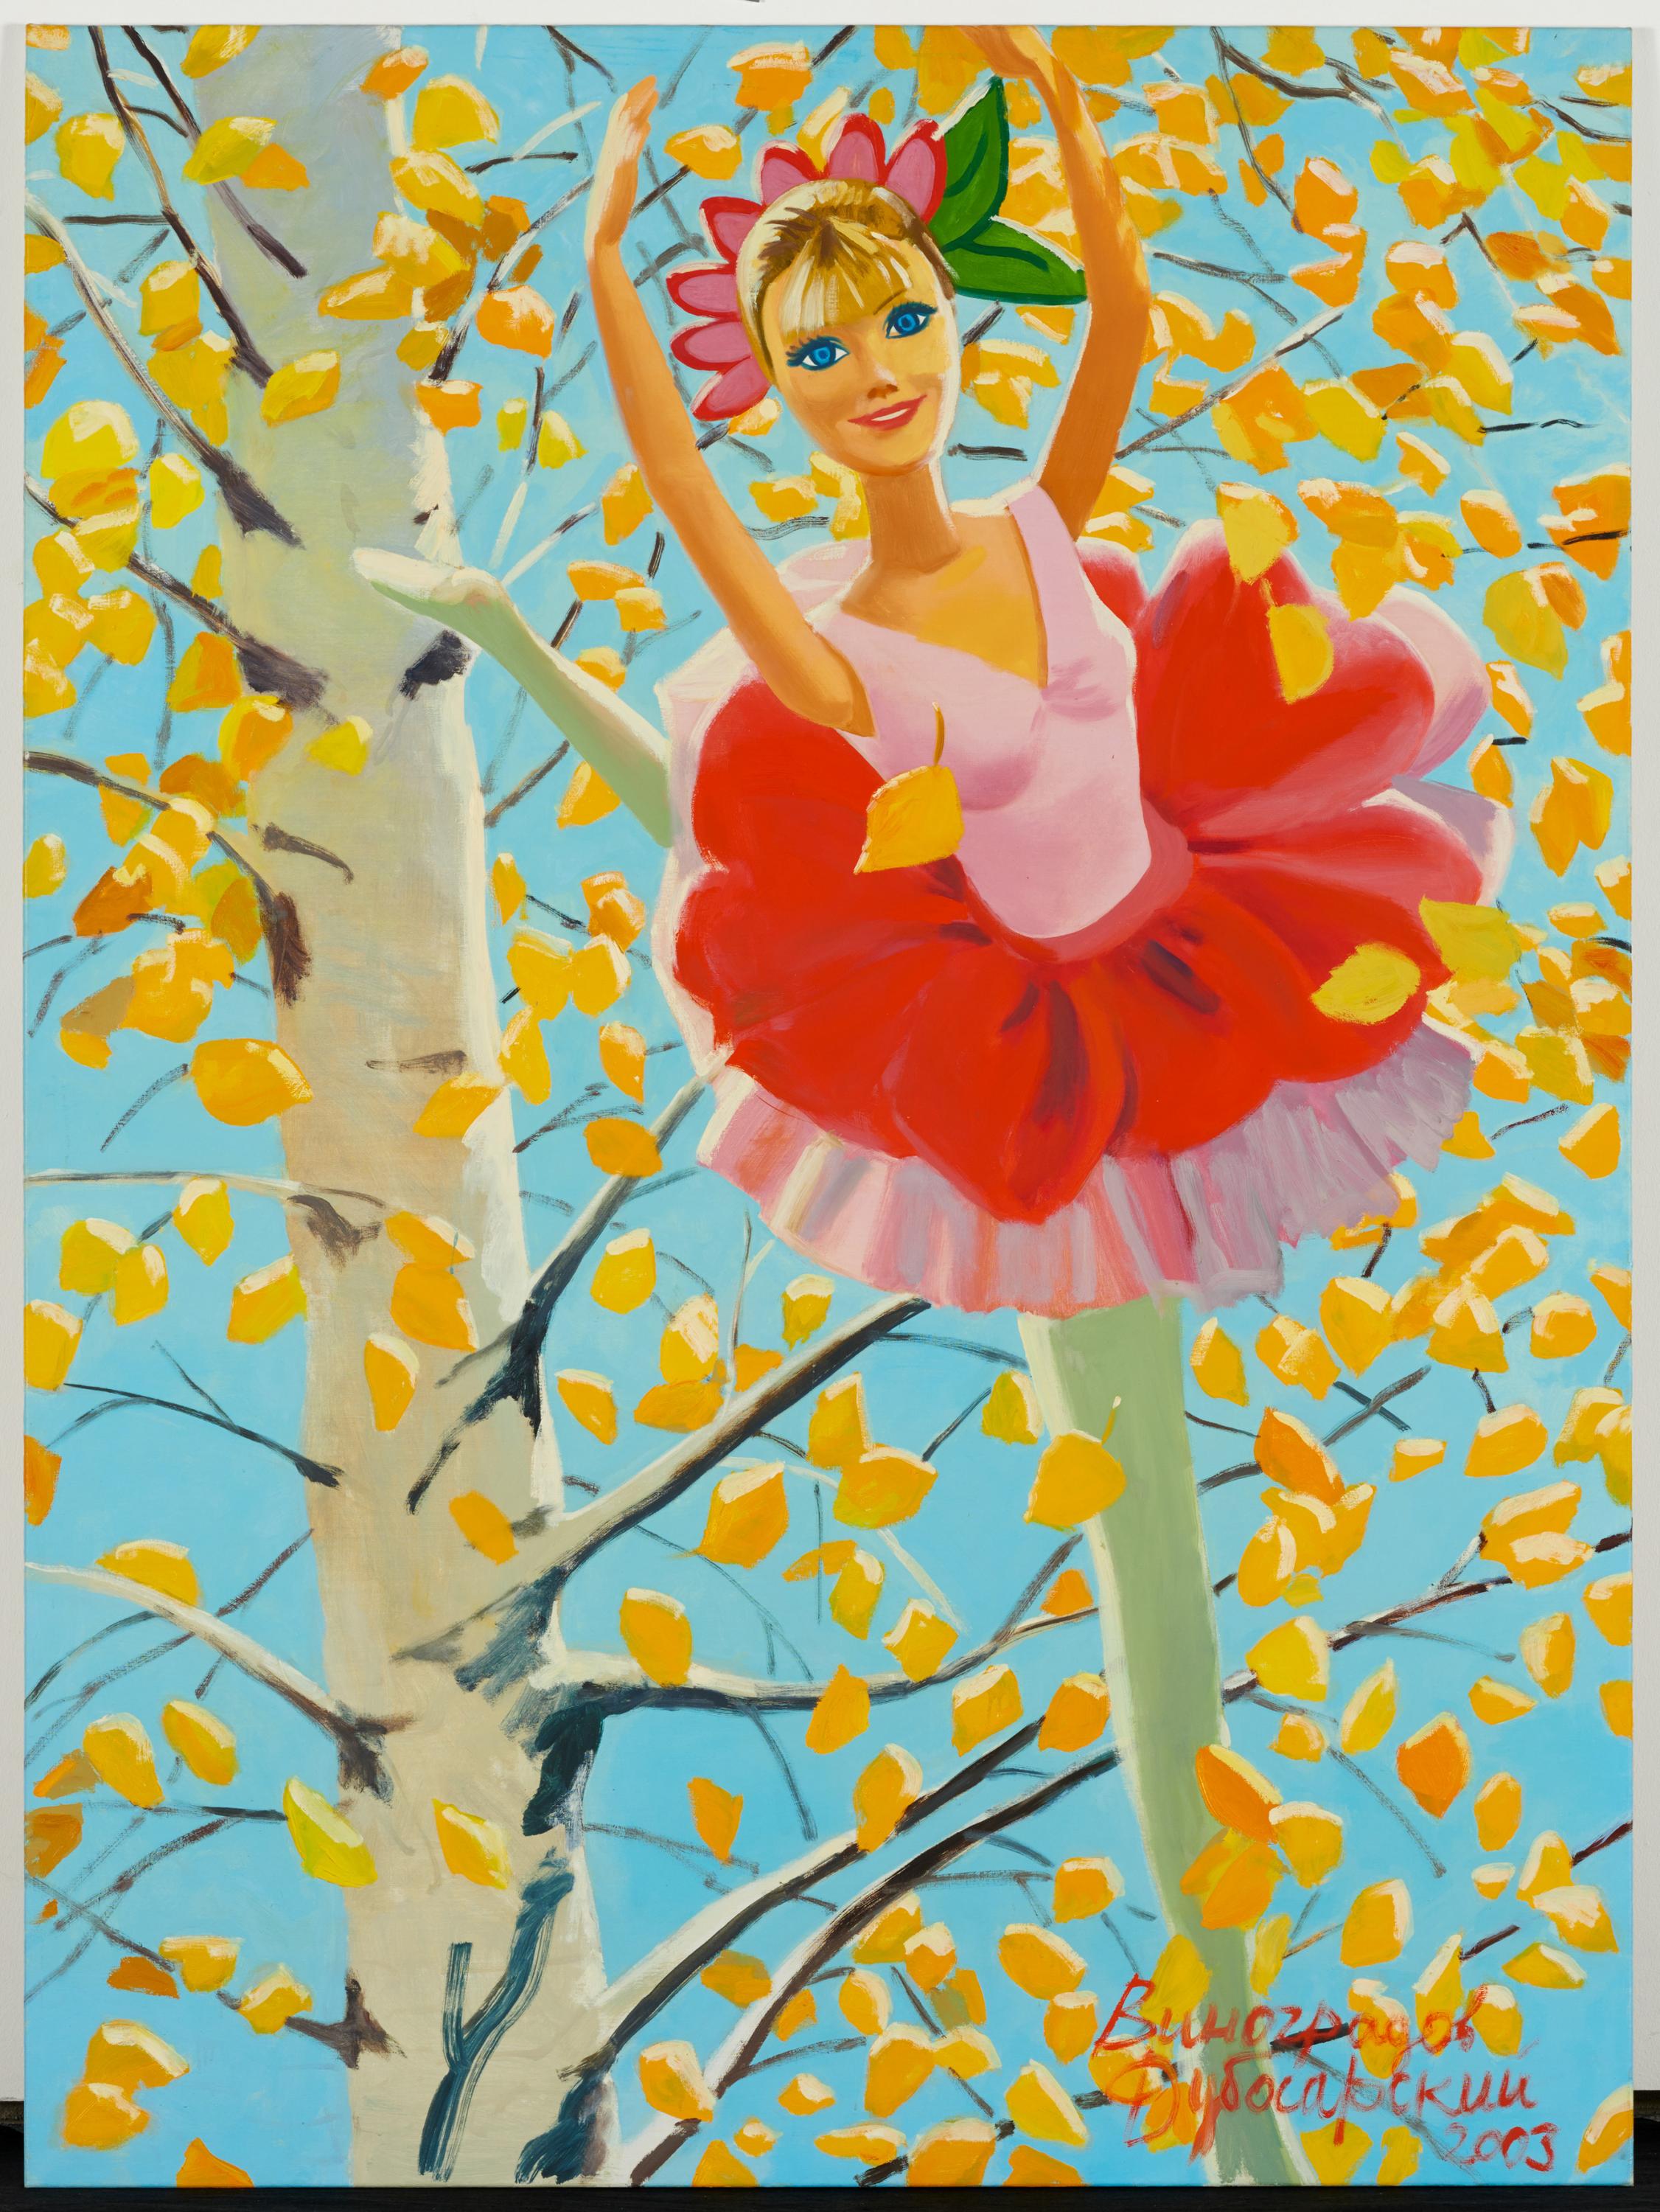 Dubossarsky & Vinogradov: "Barbe (Gold autumn)" - Image 2 of 4